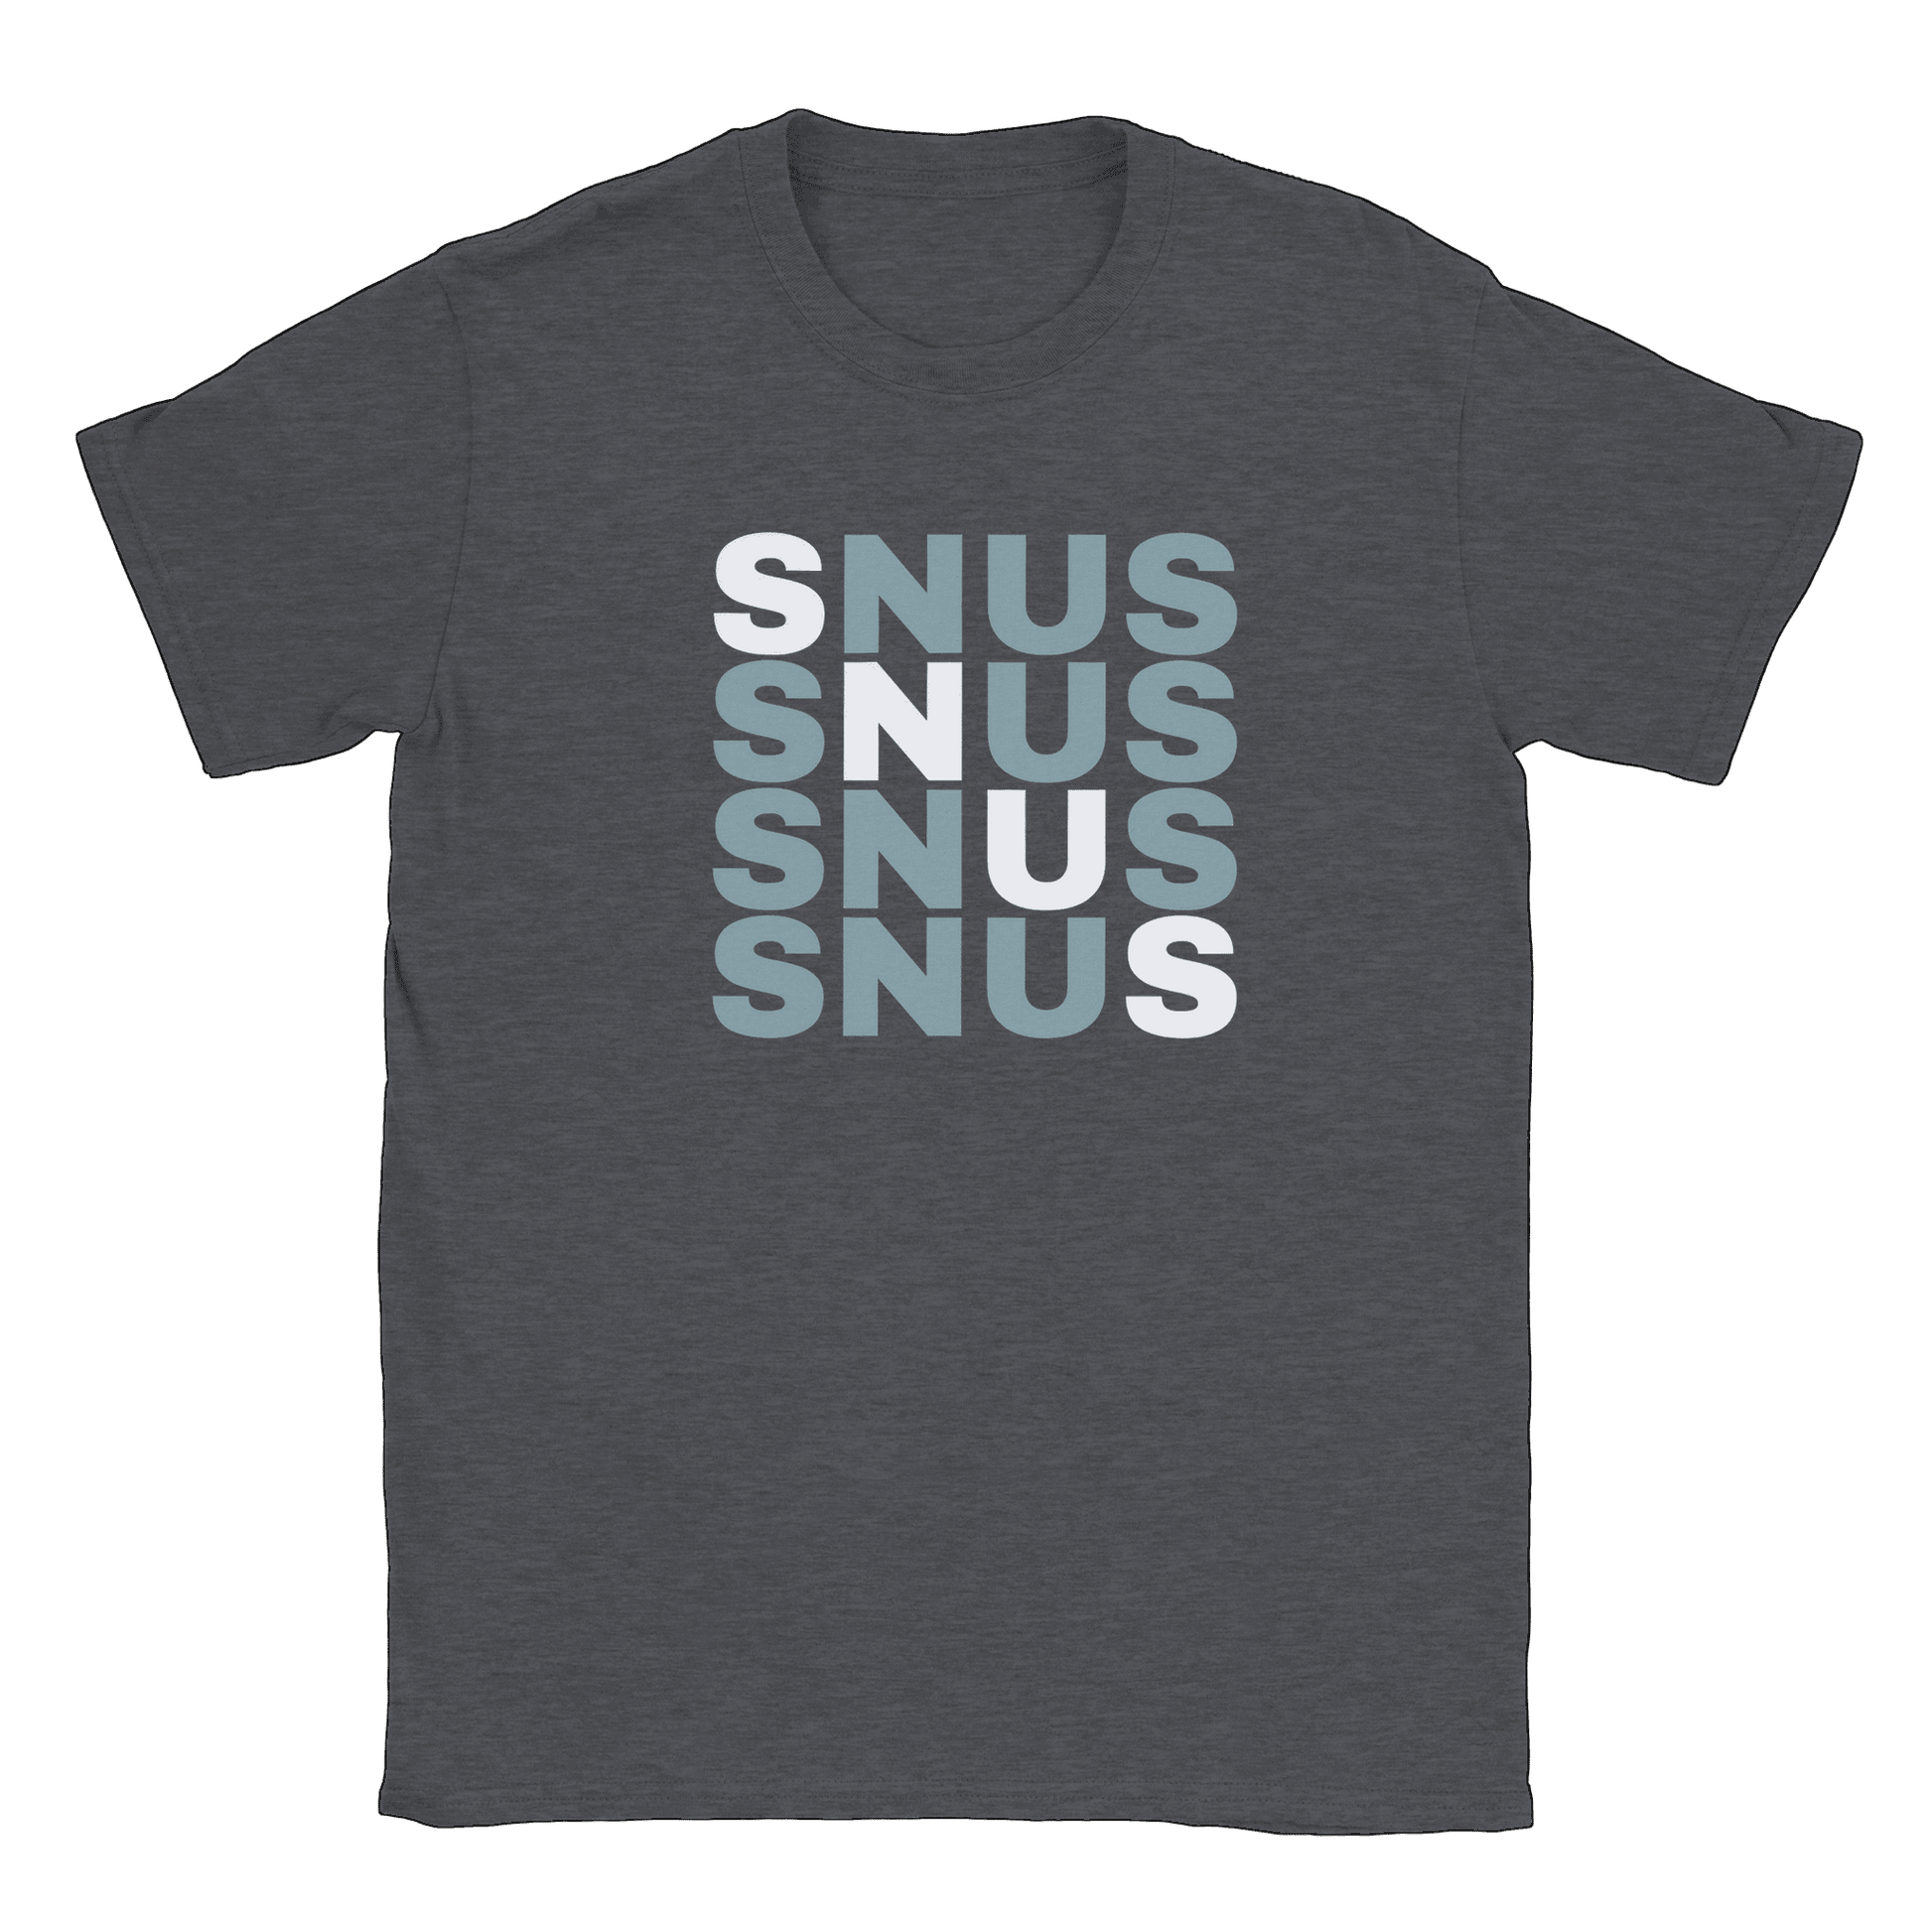 Snus x5 - T-shirt Mörk Ljung